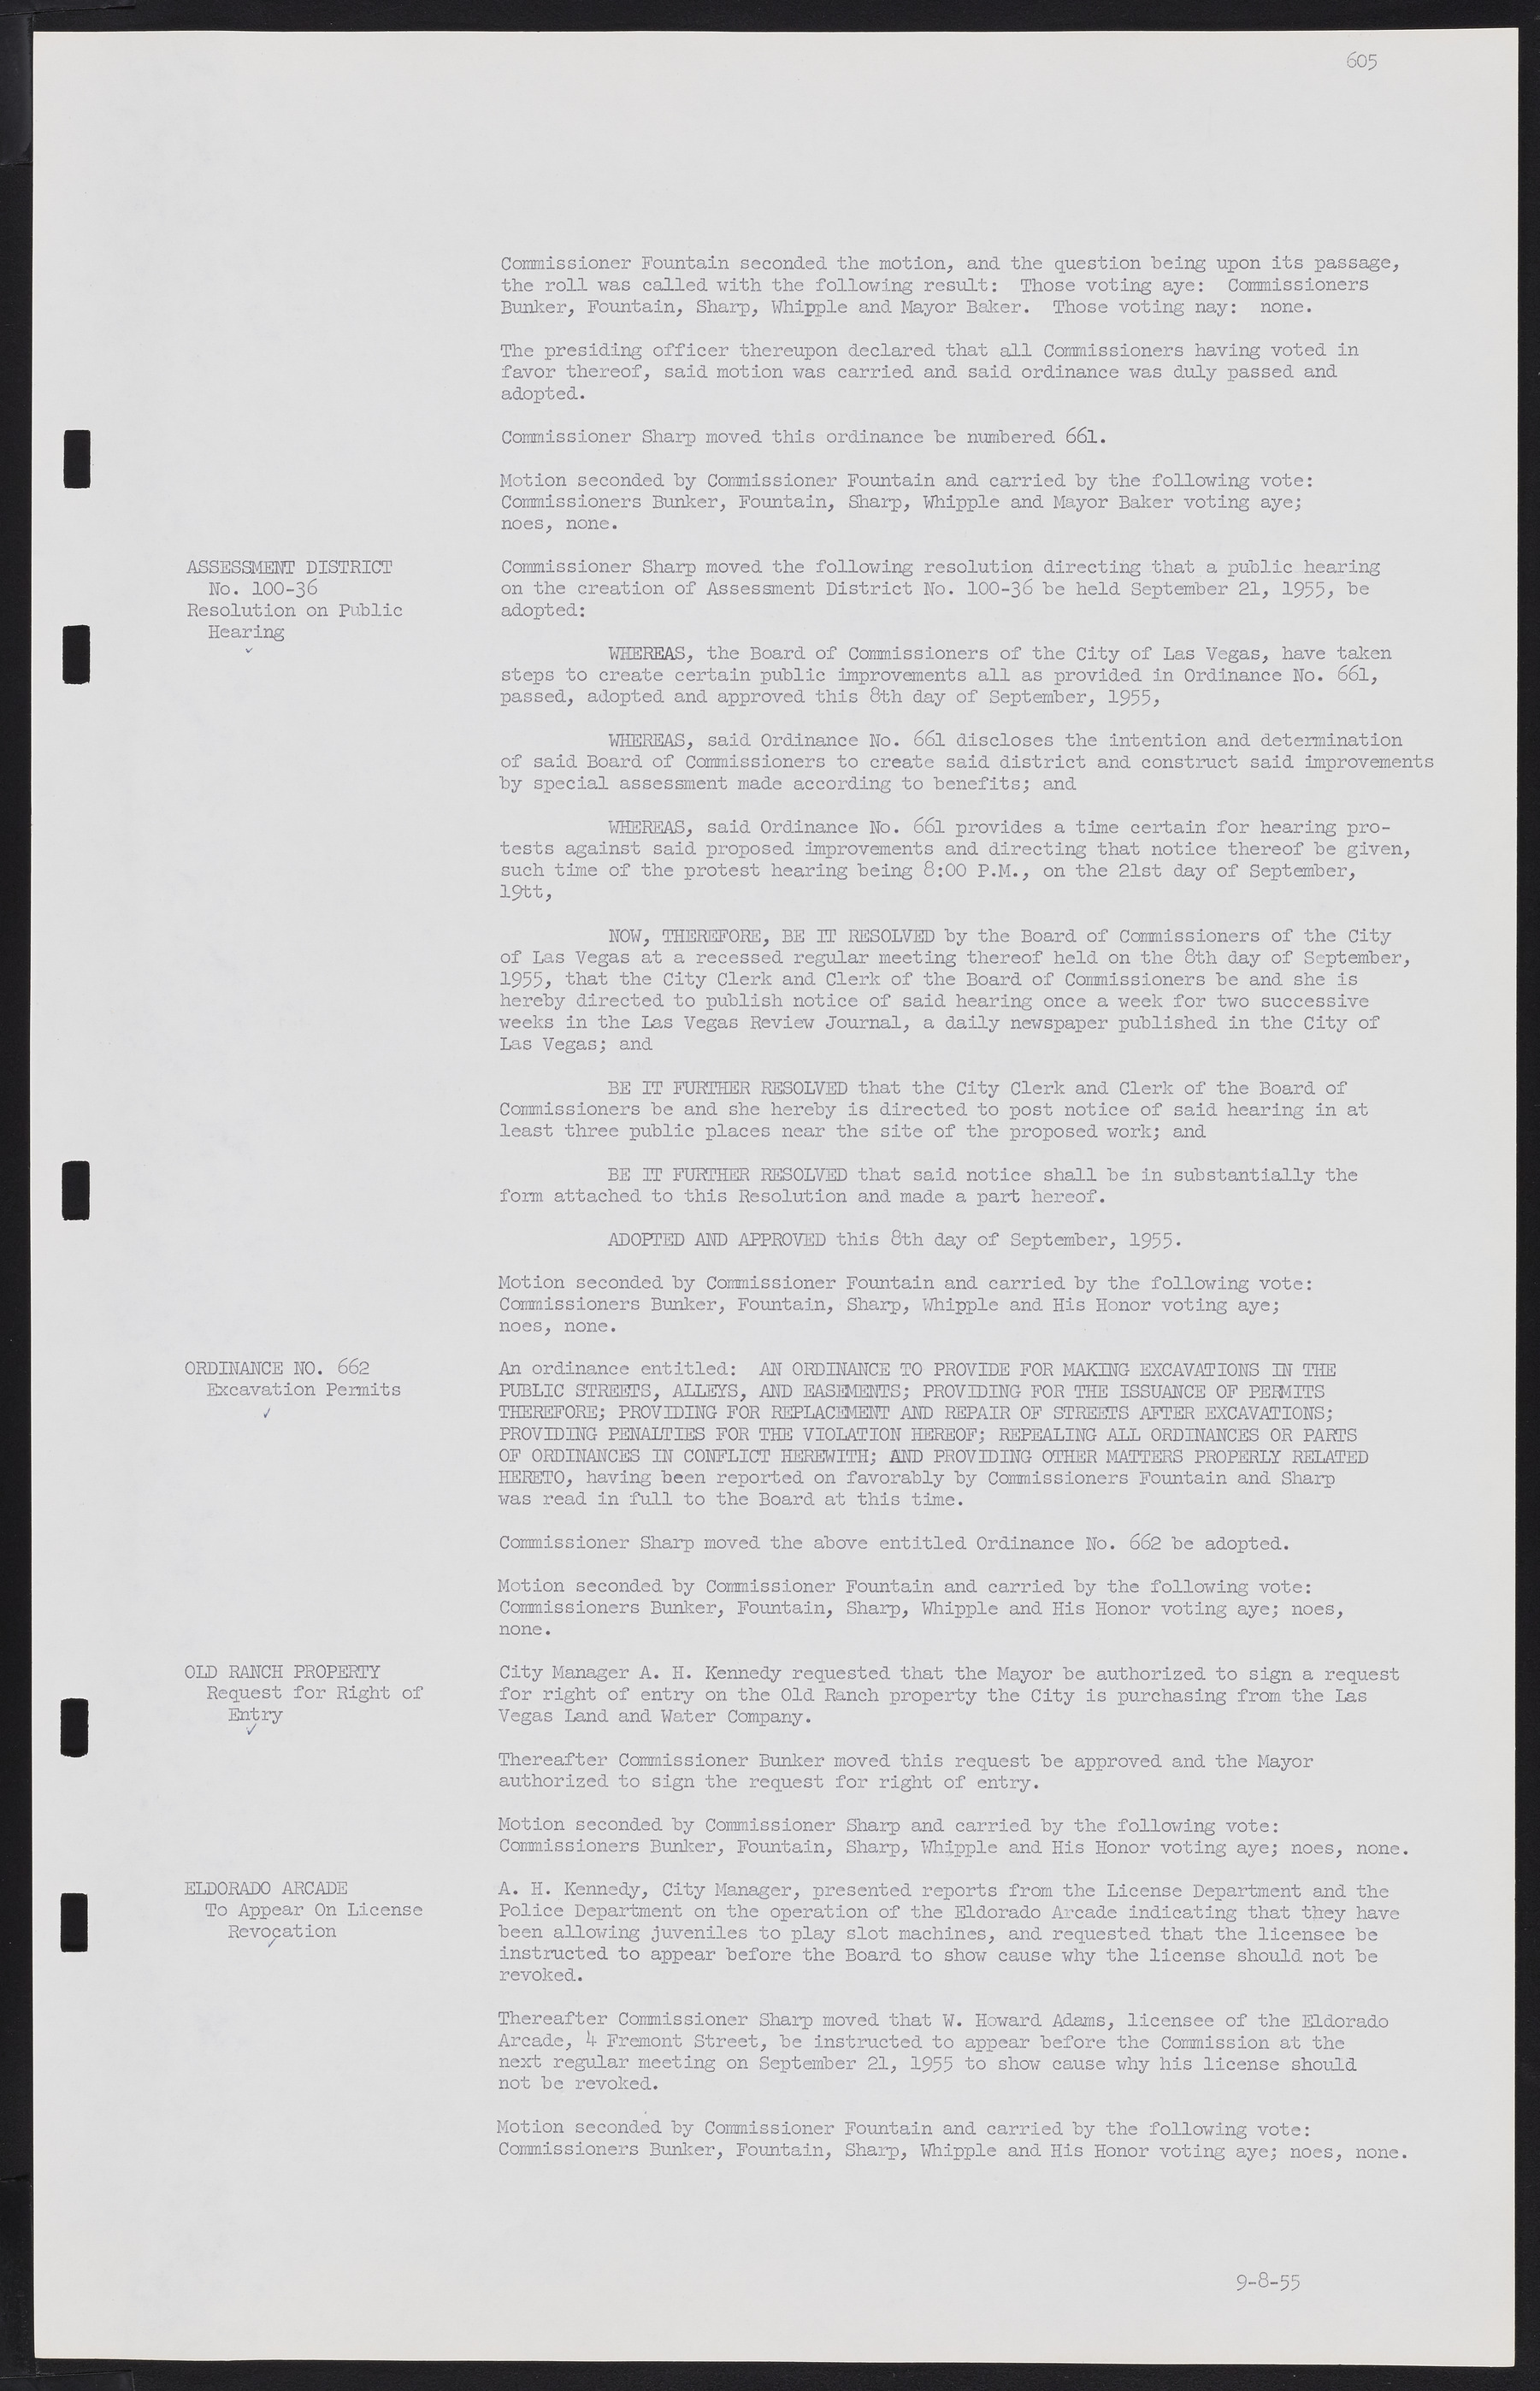 Las Vegas City Commission Minutes, February 17, 1954 to September 21, 1955, lvc000009-611